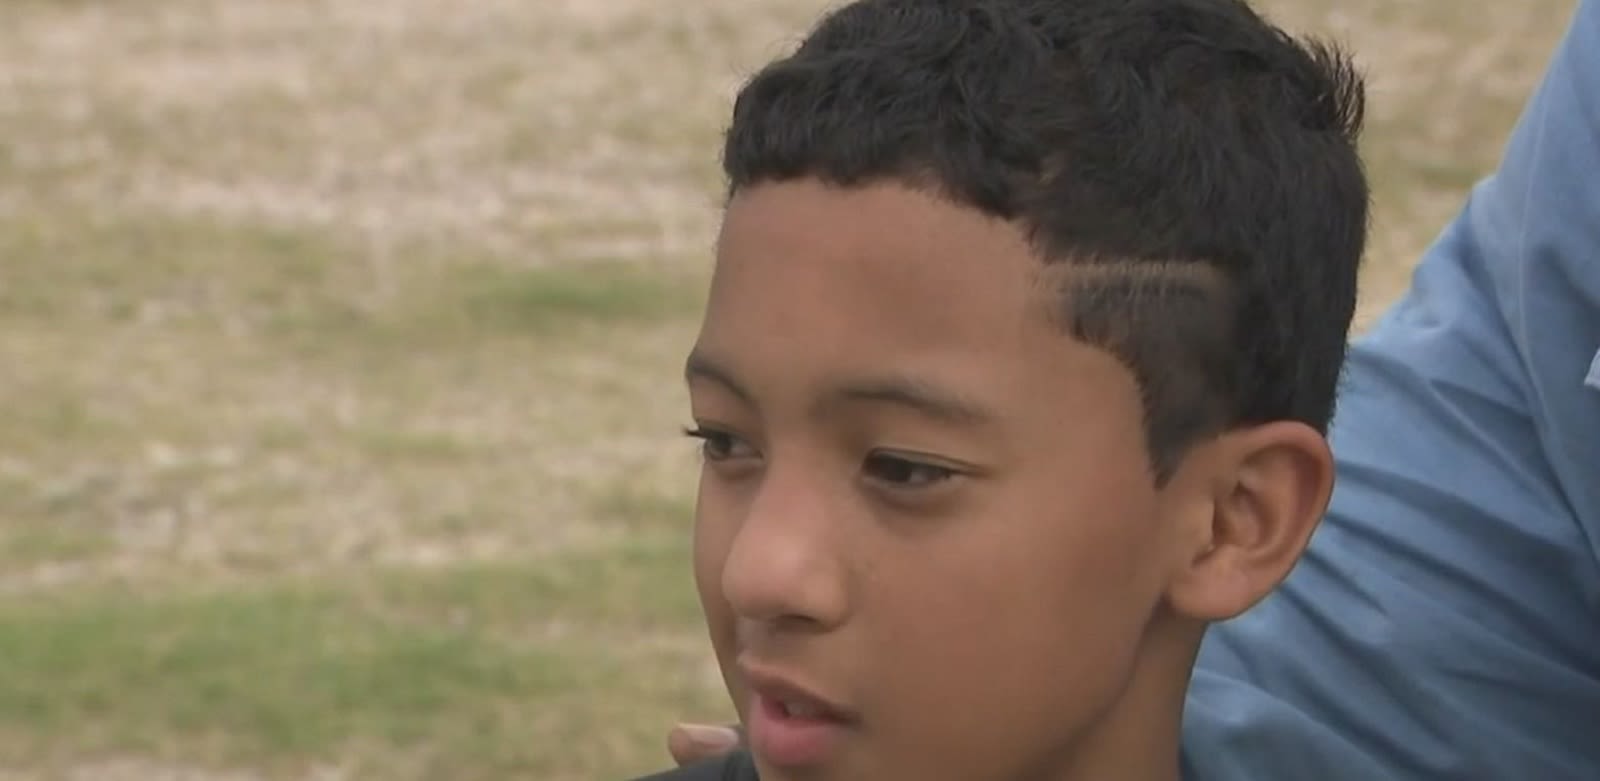 School tells this 6th-grader to fix his haircut or face suspension | CNN